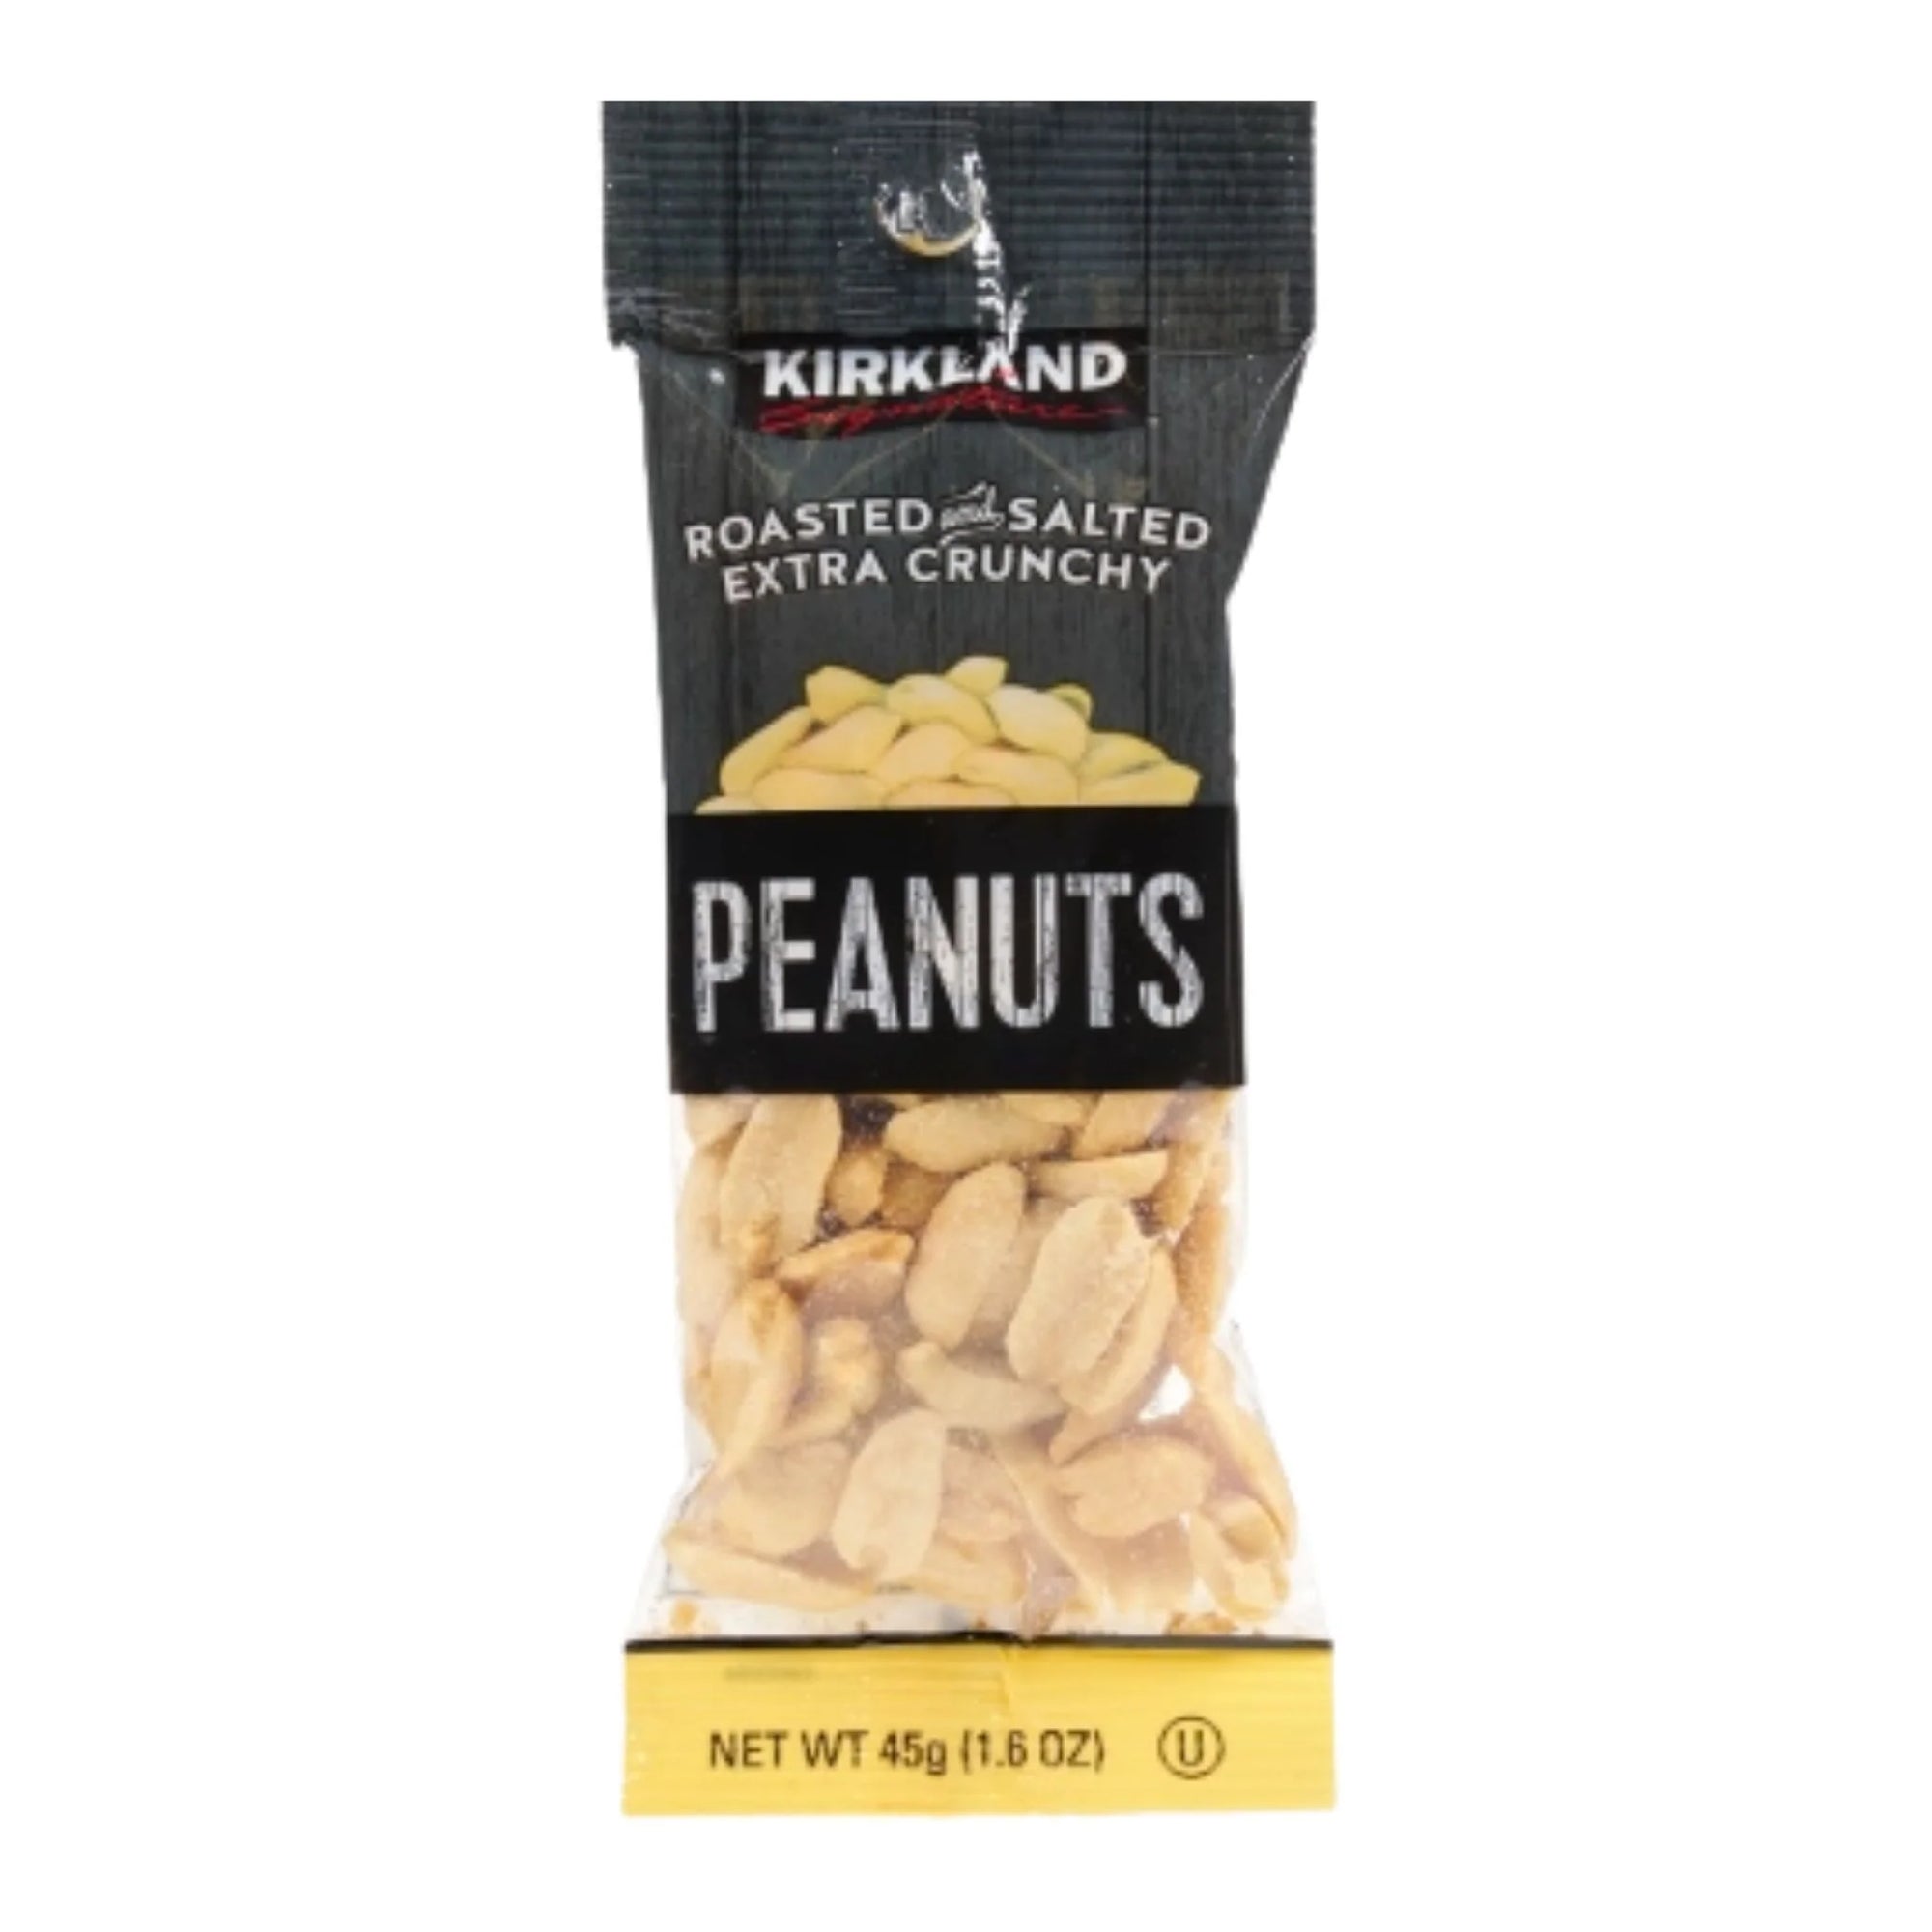 Kirkland Roasted & Salted Extra Crunchy Peanuts 45g